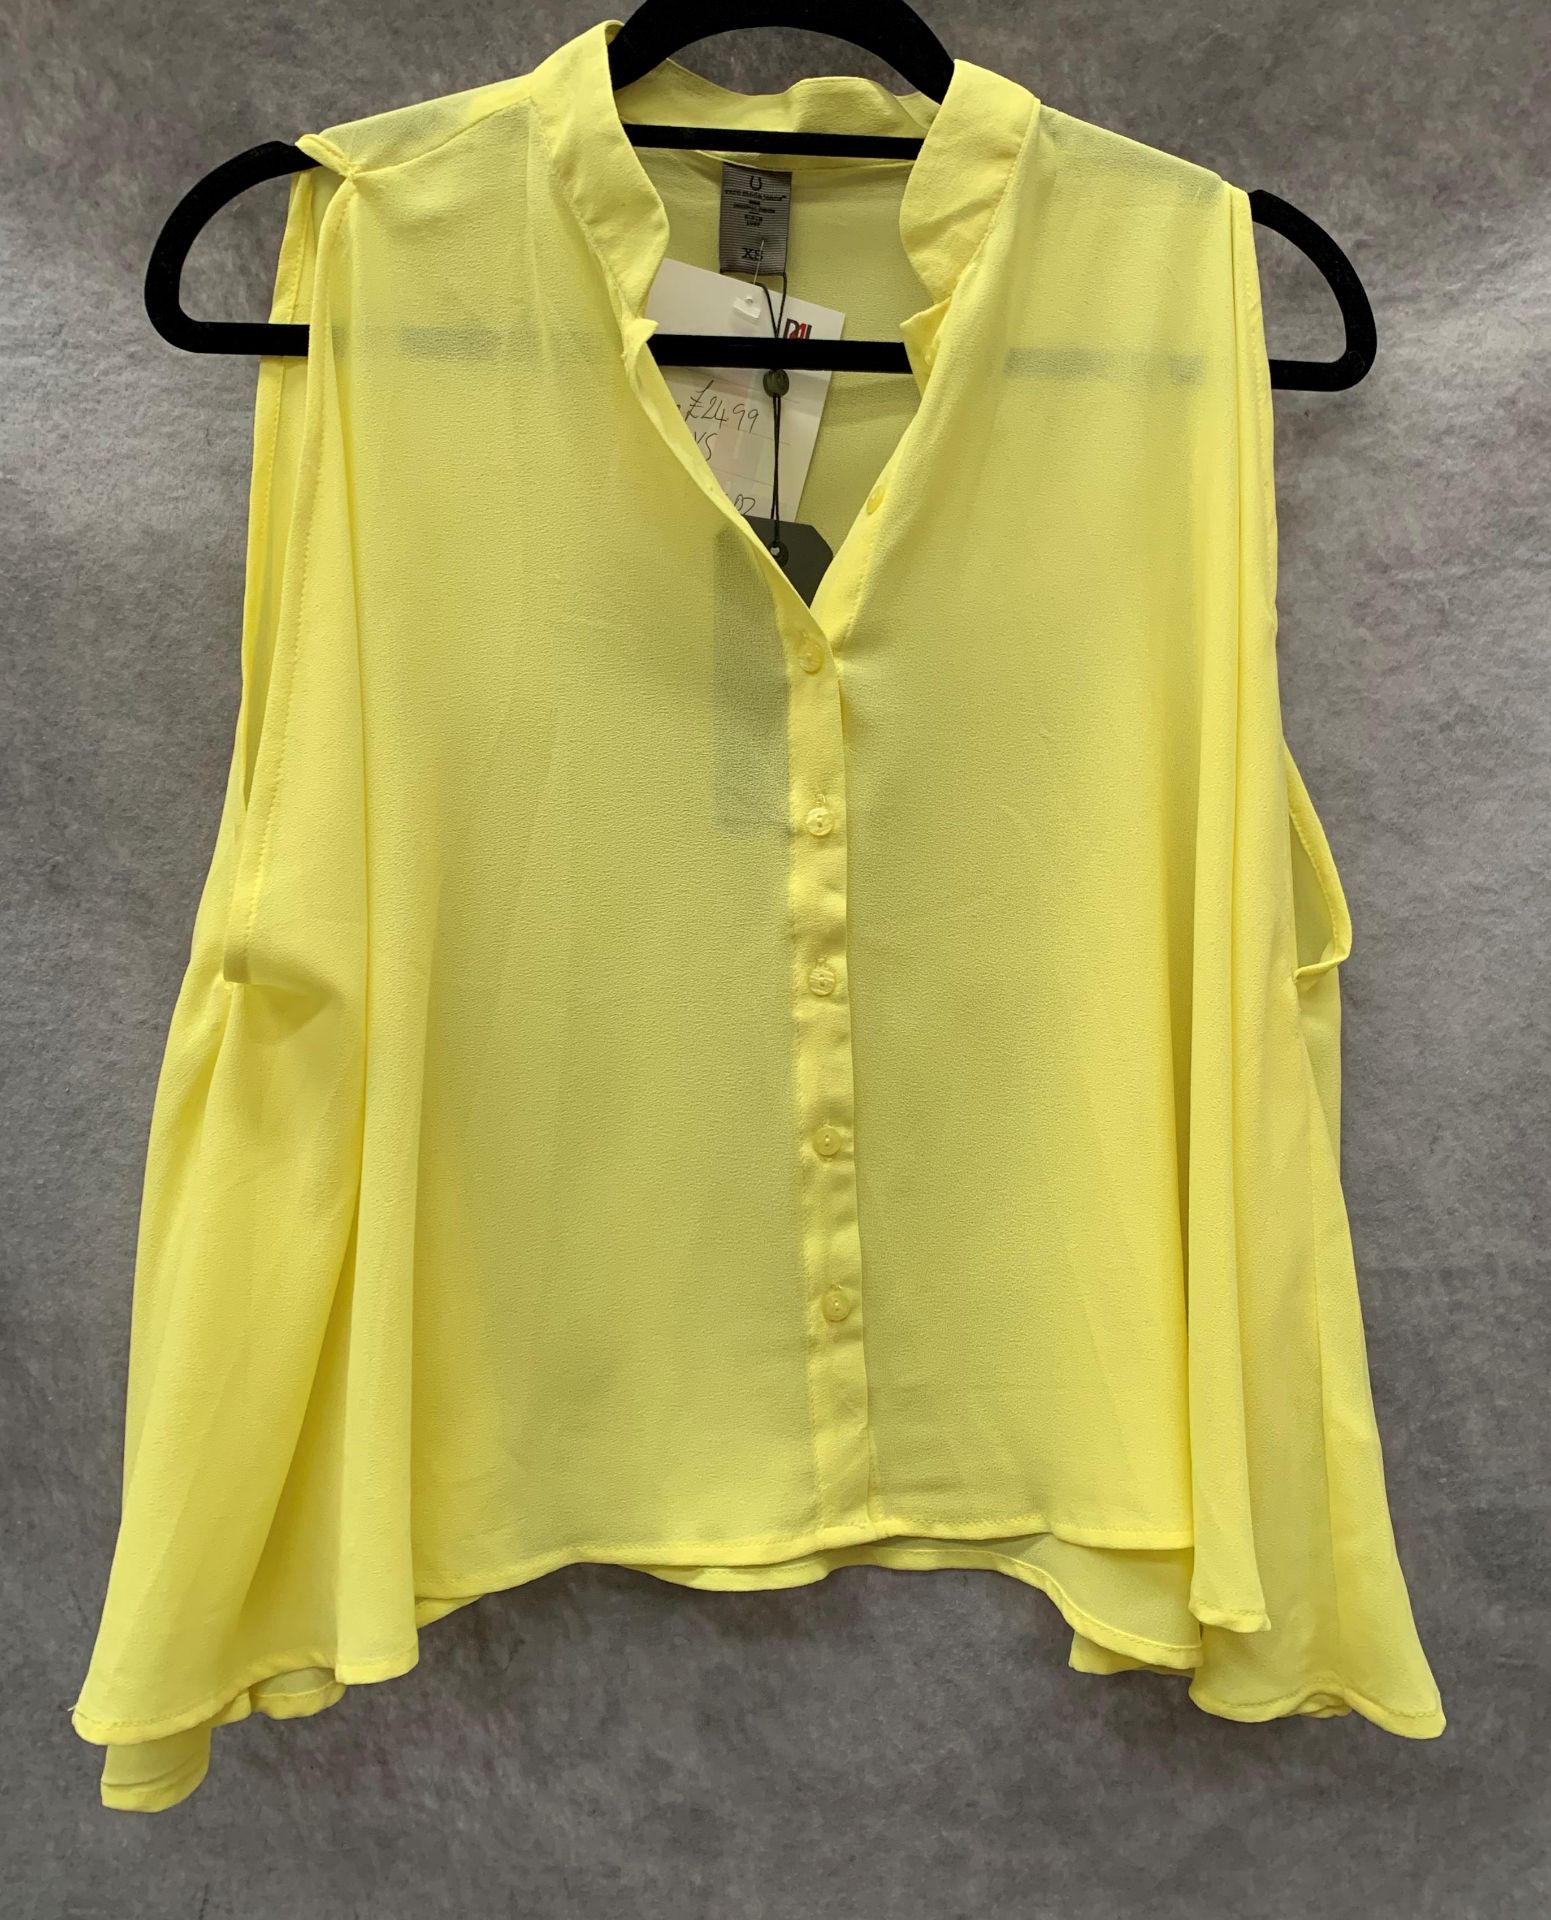 A Vera Moda ladies blouse, yellow, size M,